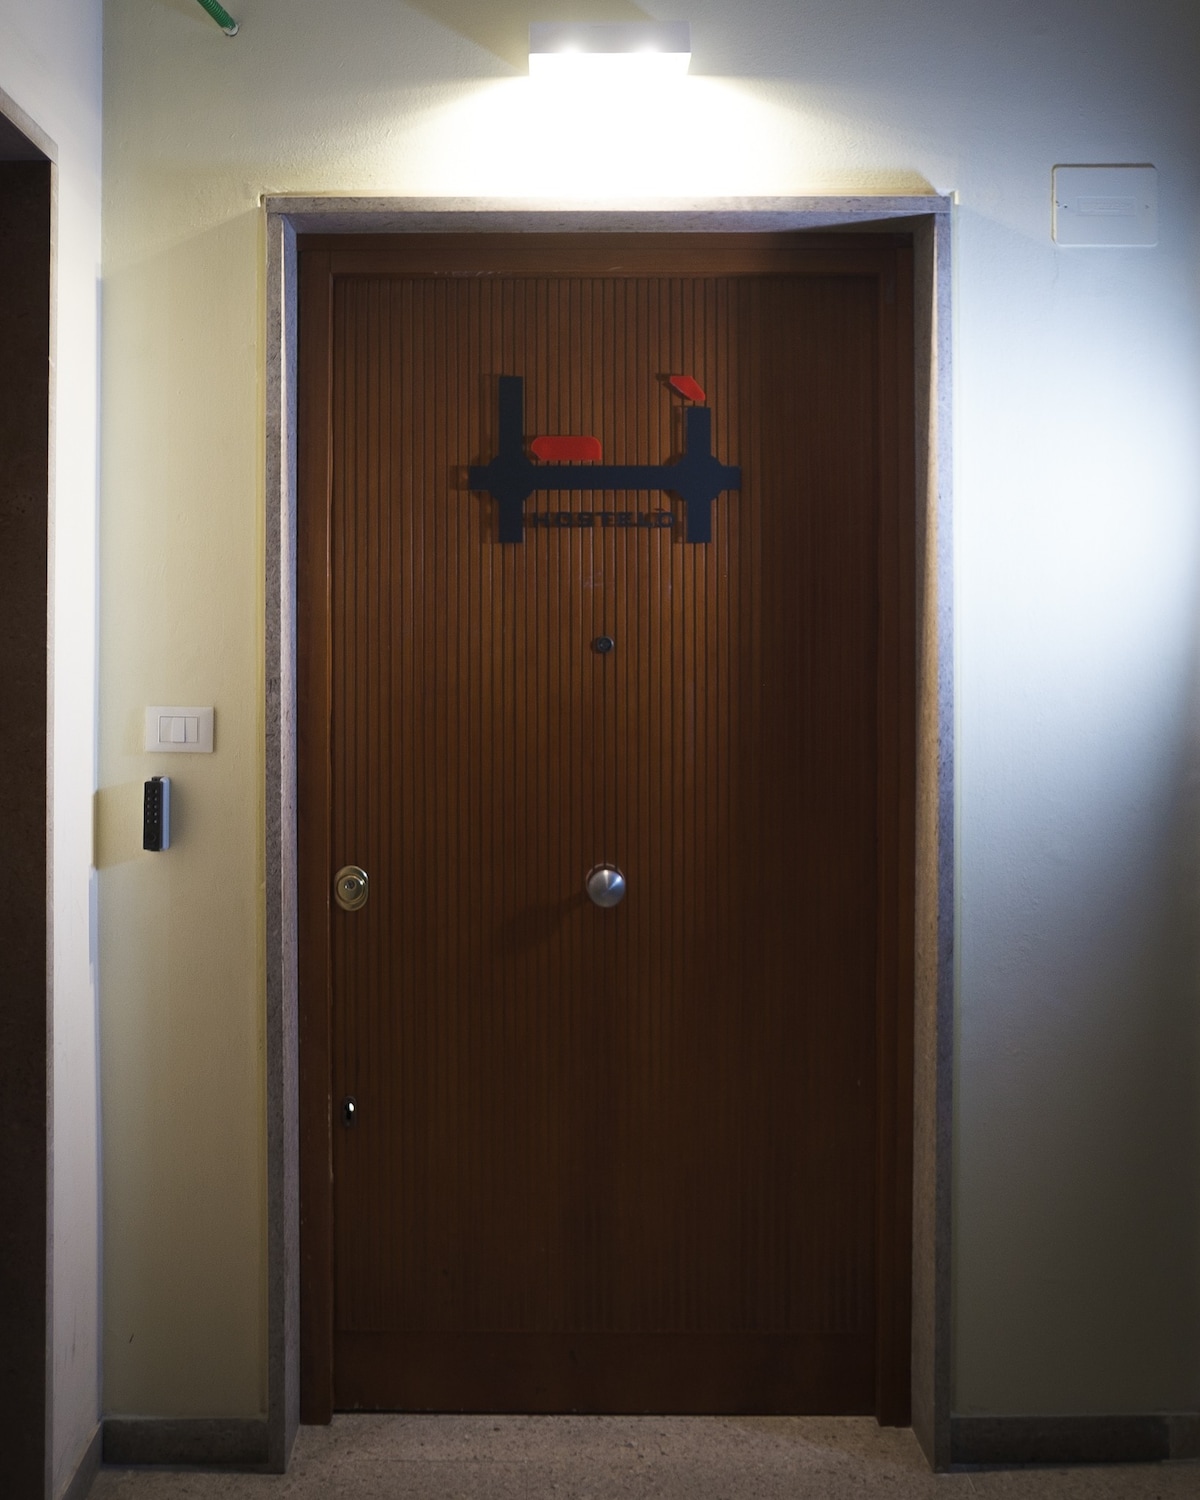 Camera "Ammiscata" da Hostelò